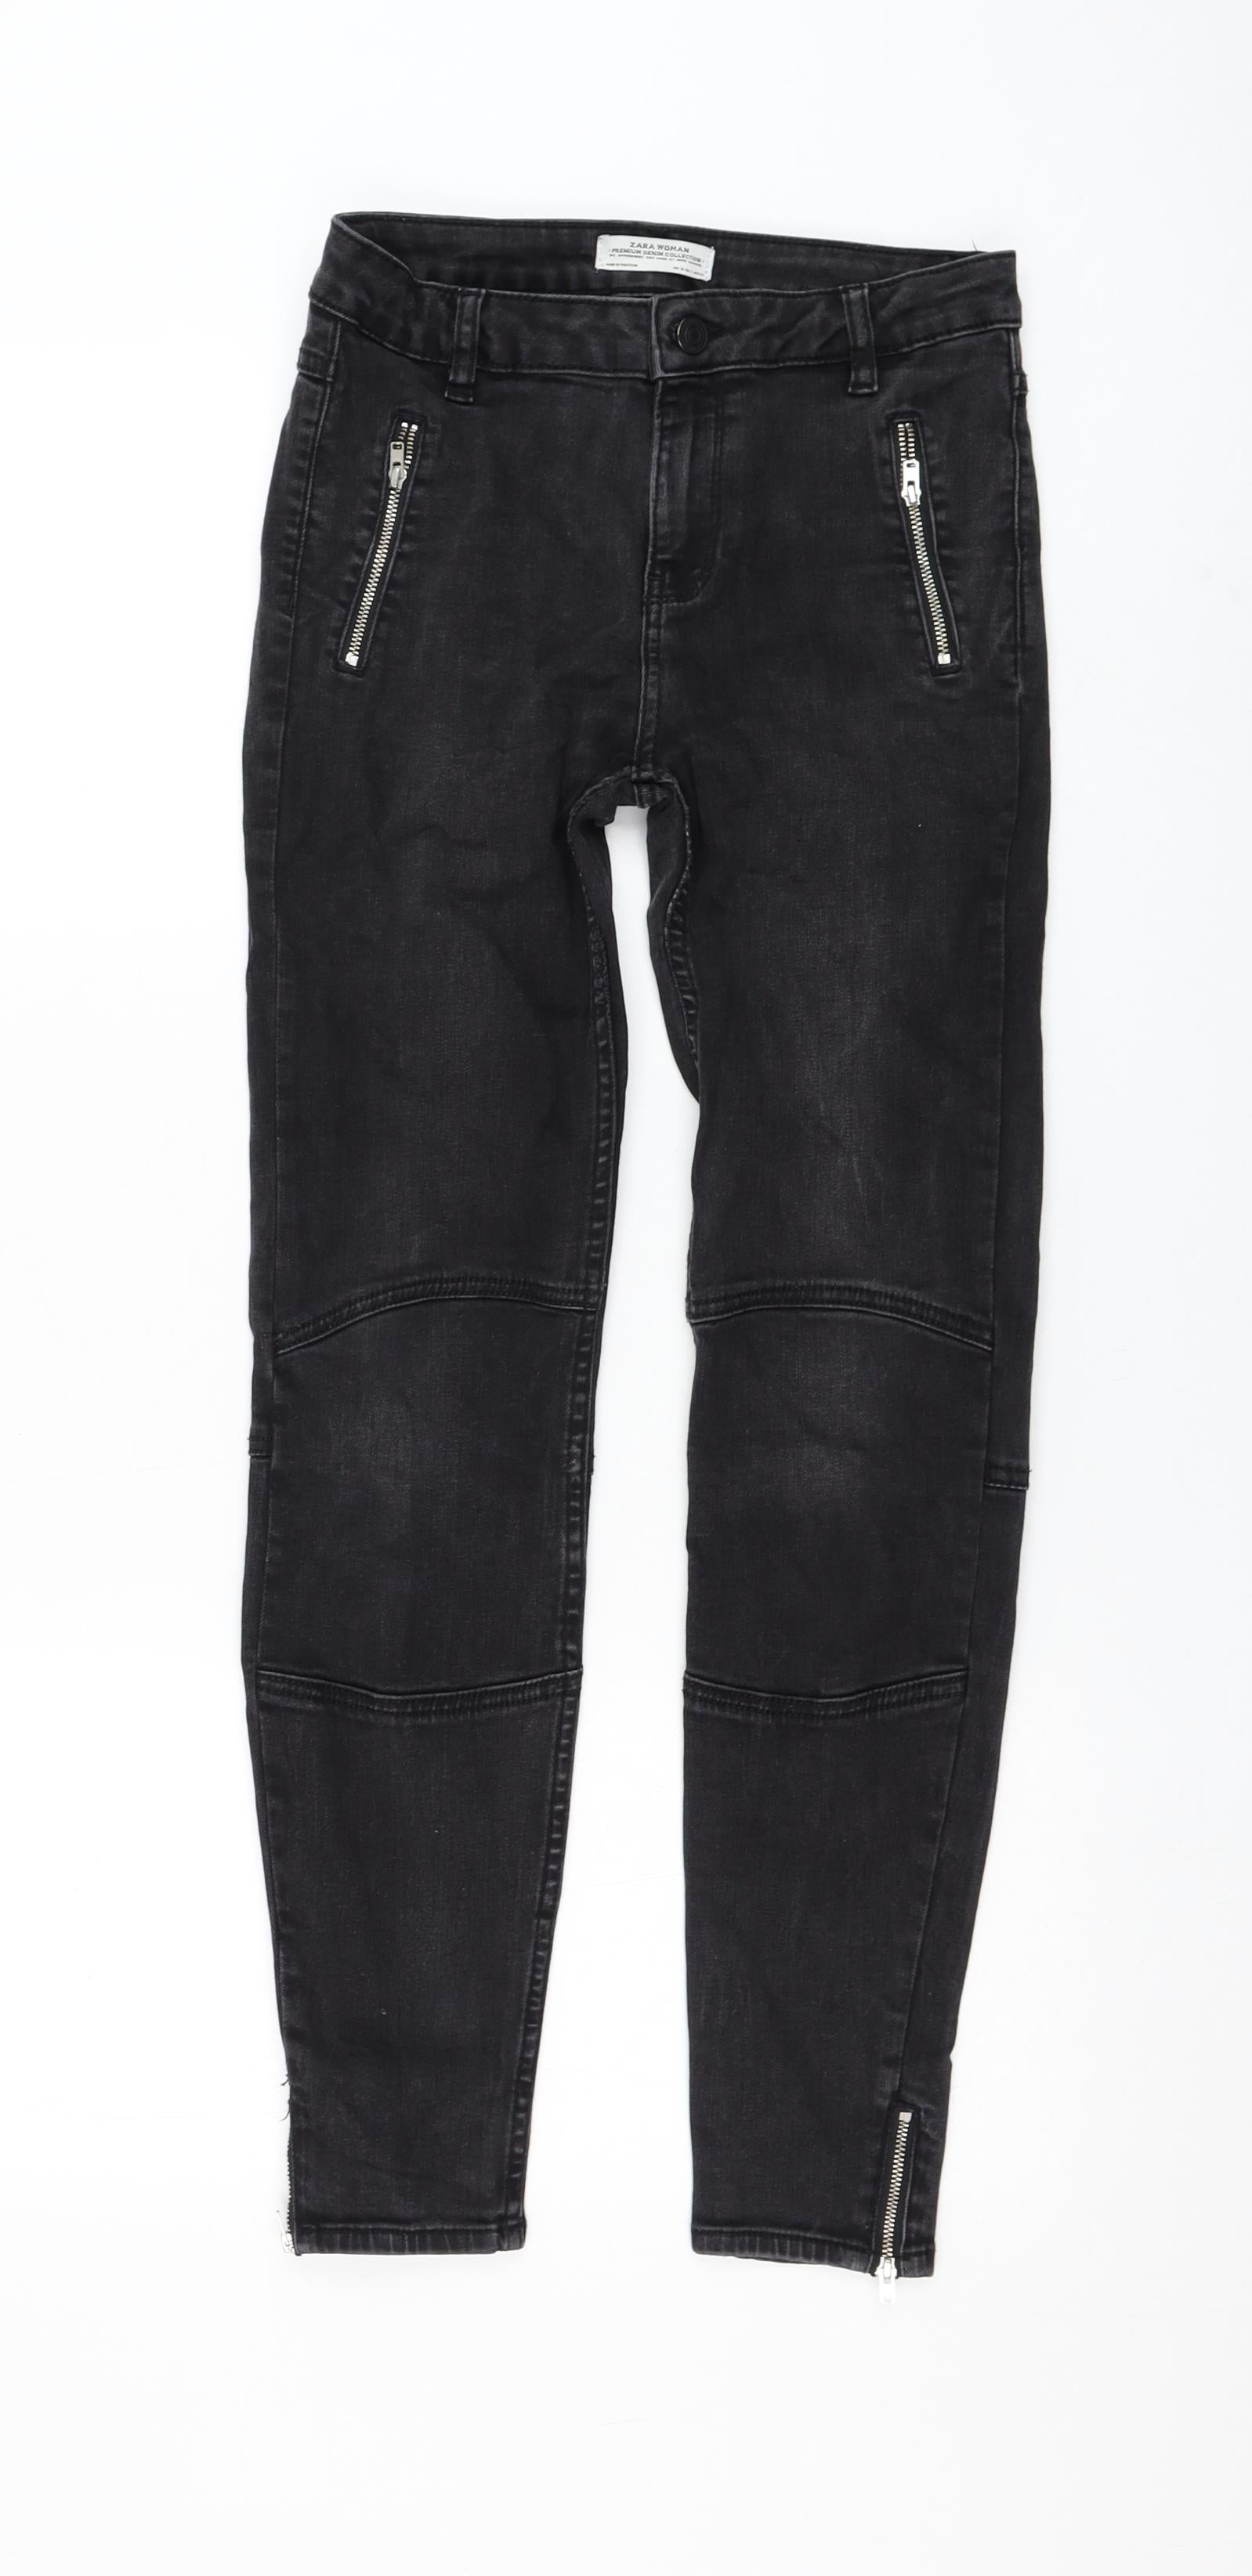 Zara Unisex Skinny Jeans